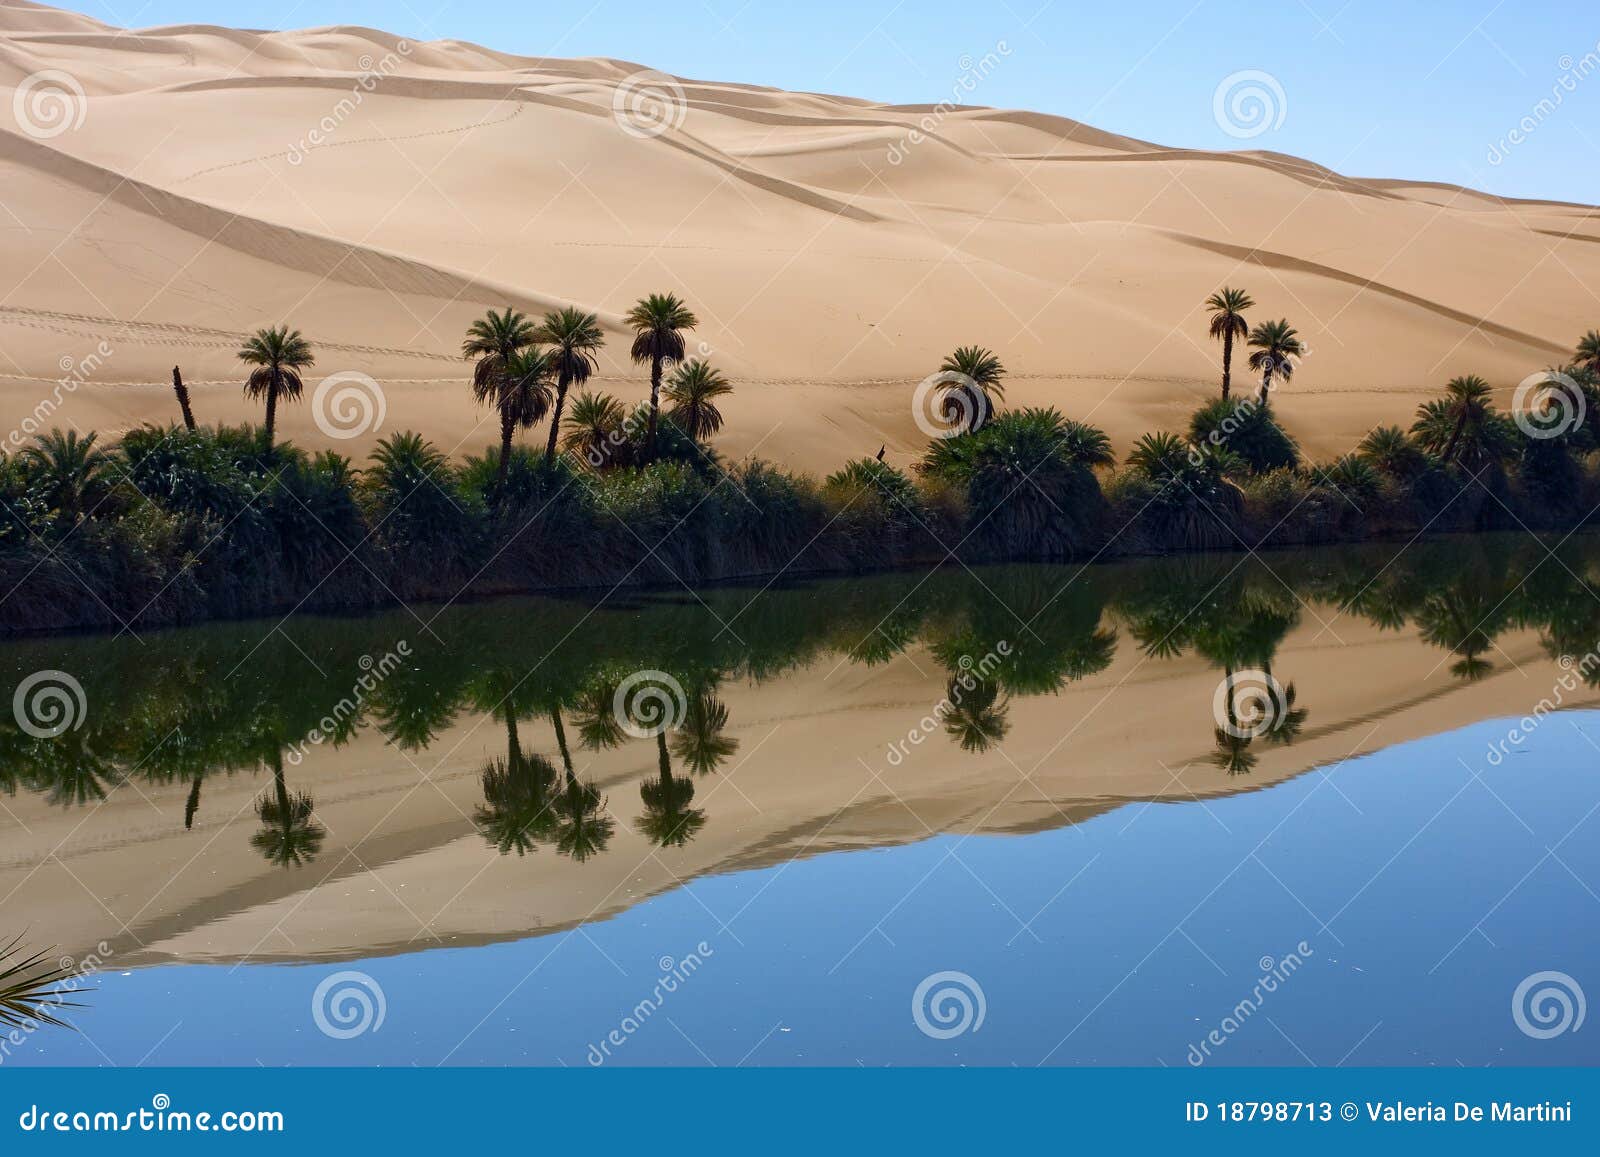 oasis, lake gabron libya